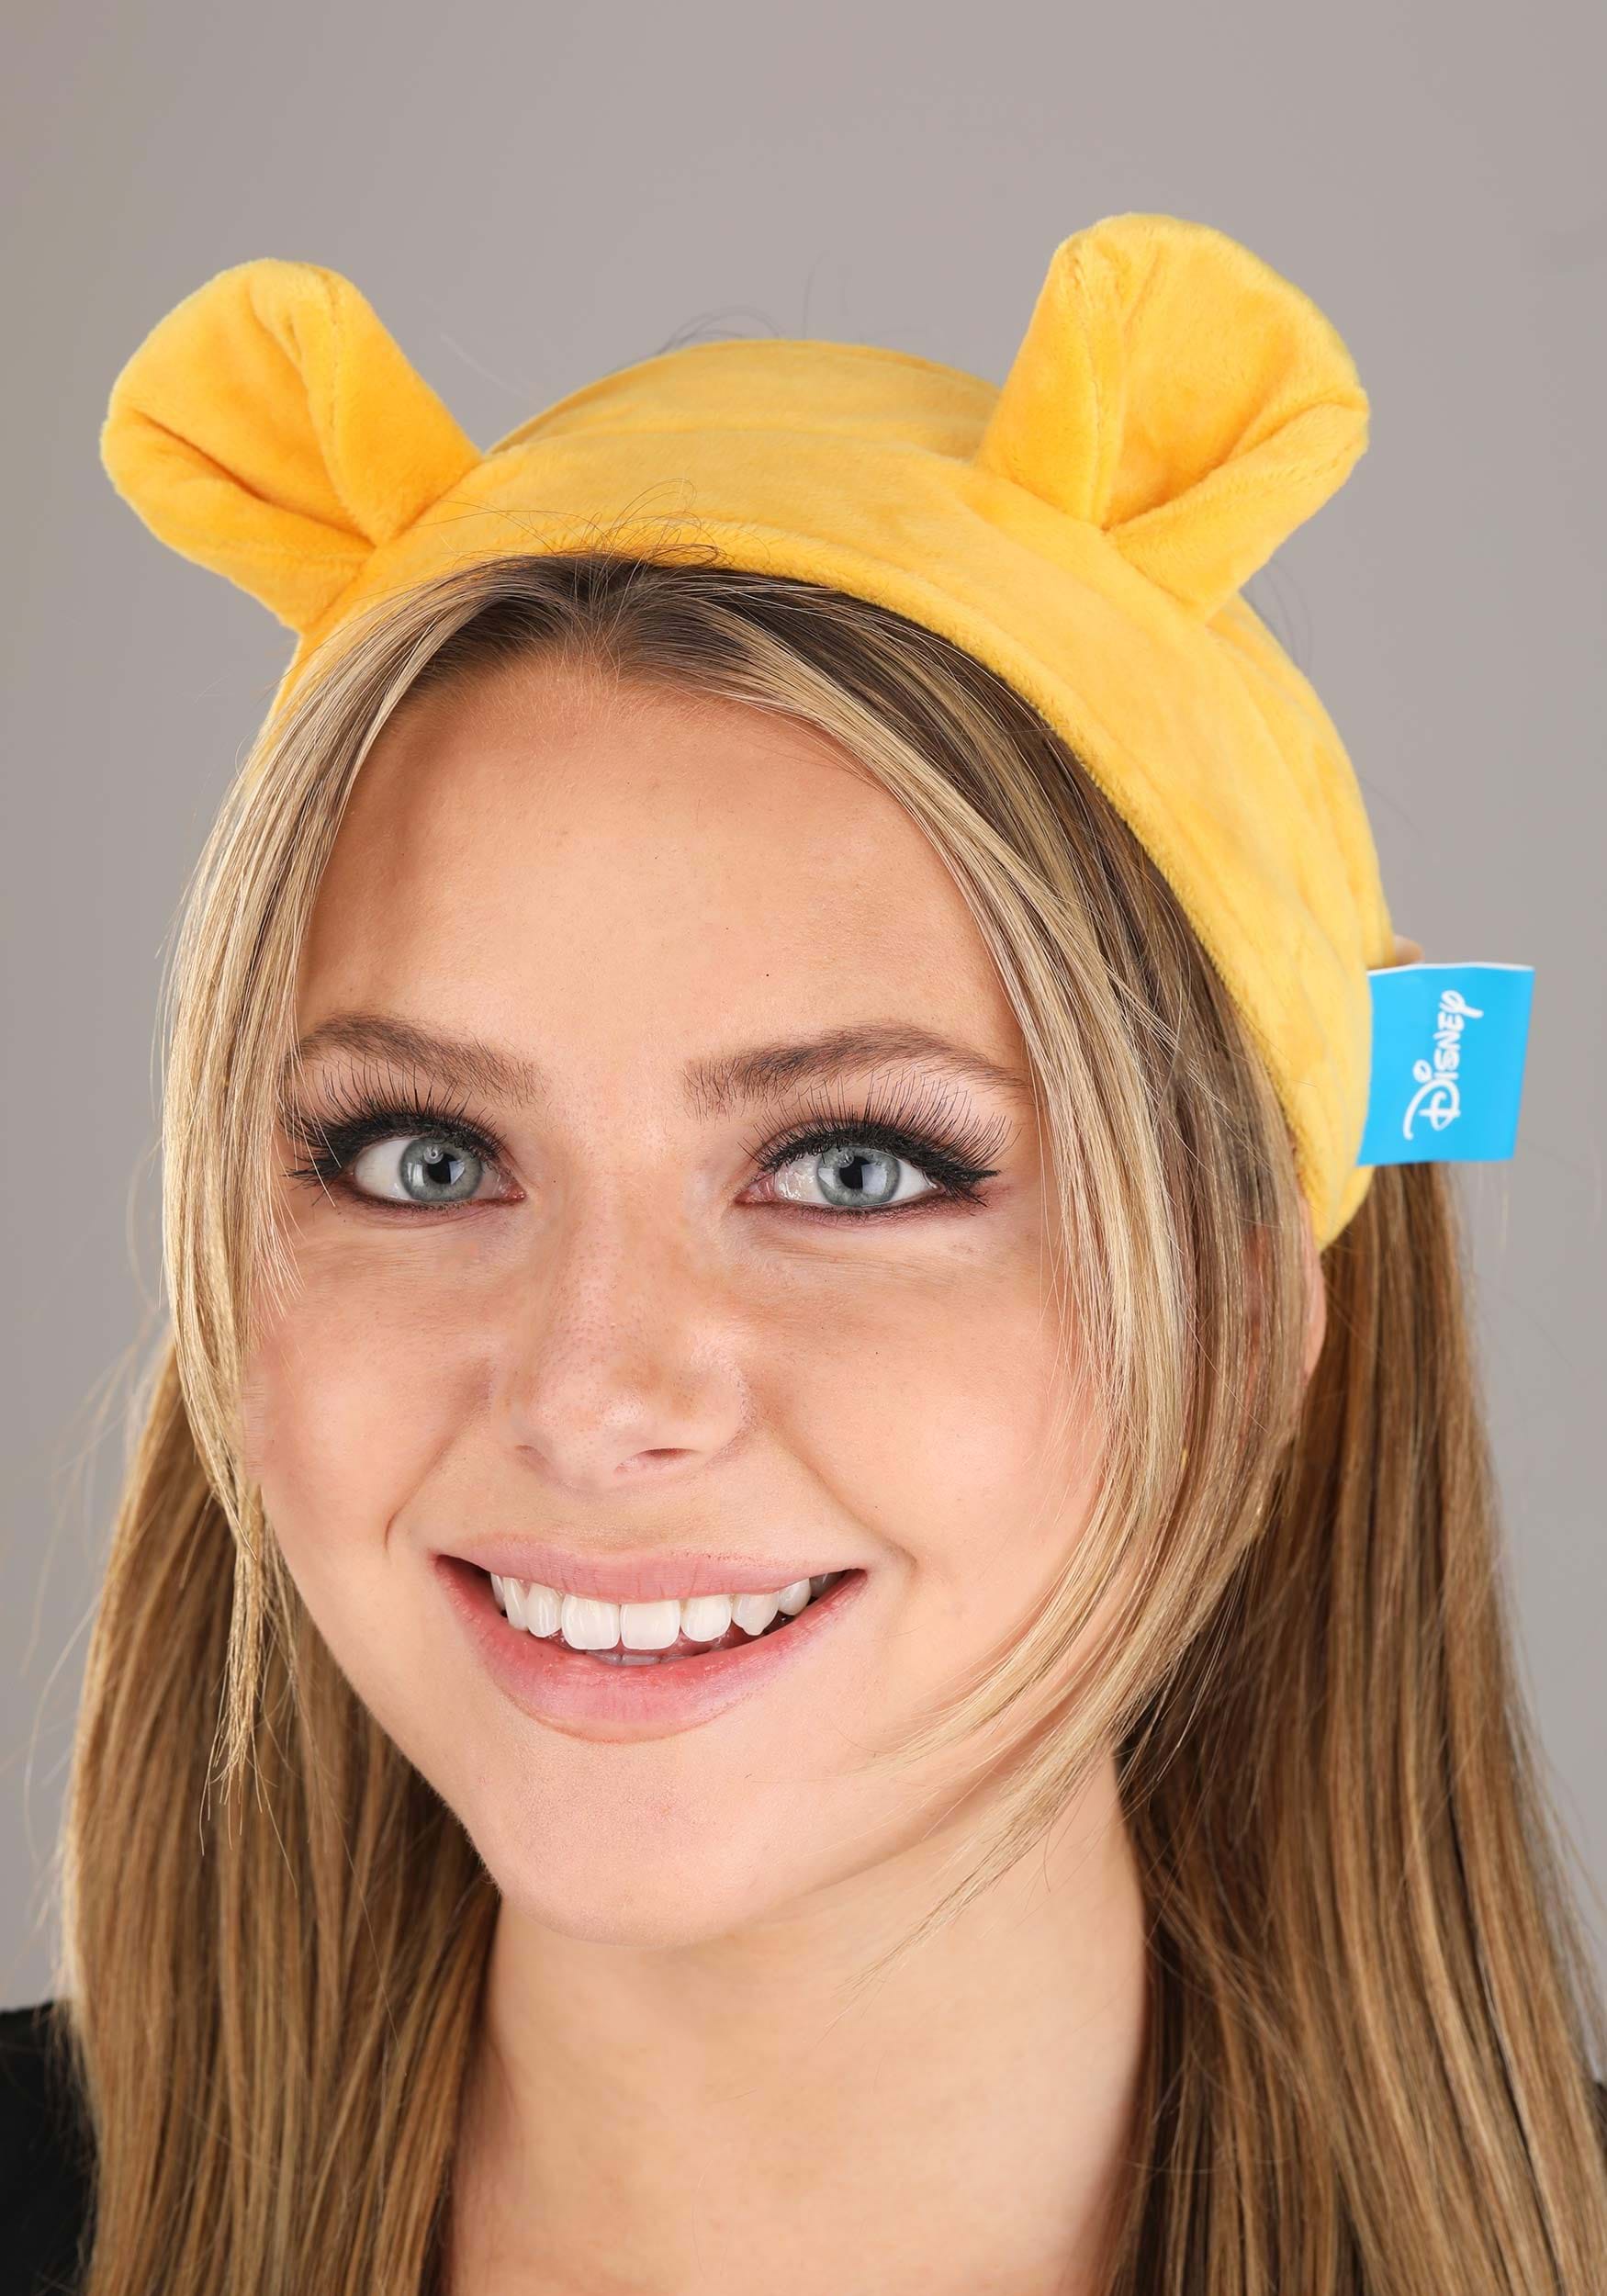 Winnie The Pooh Soft Headband & Gloves Kit